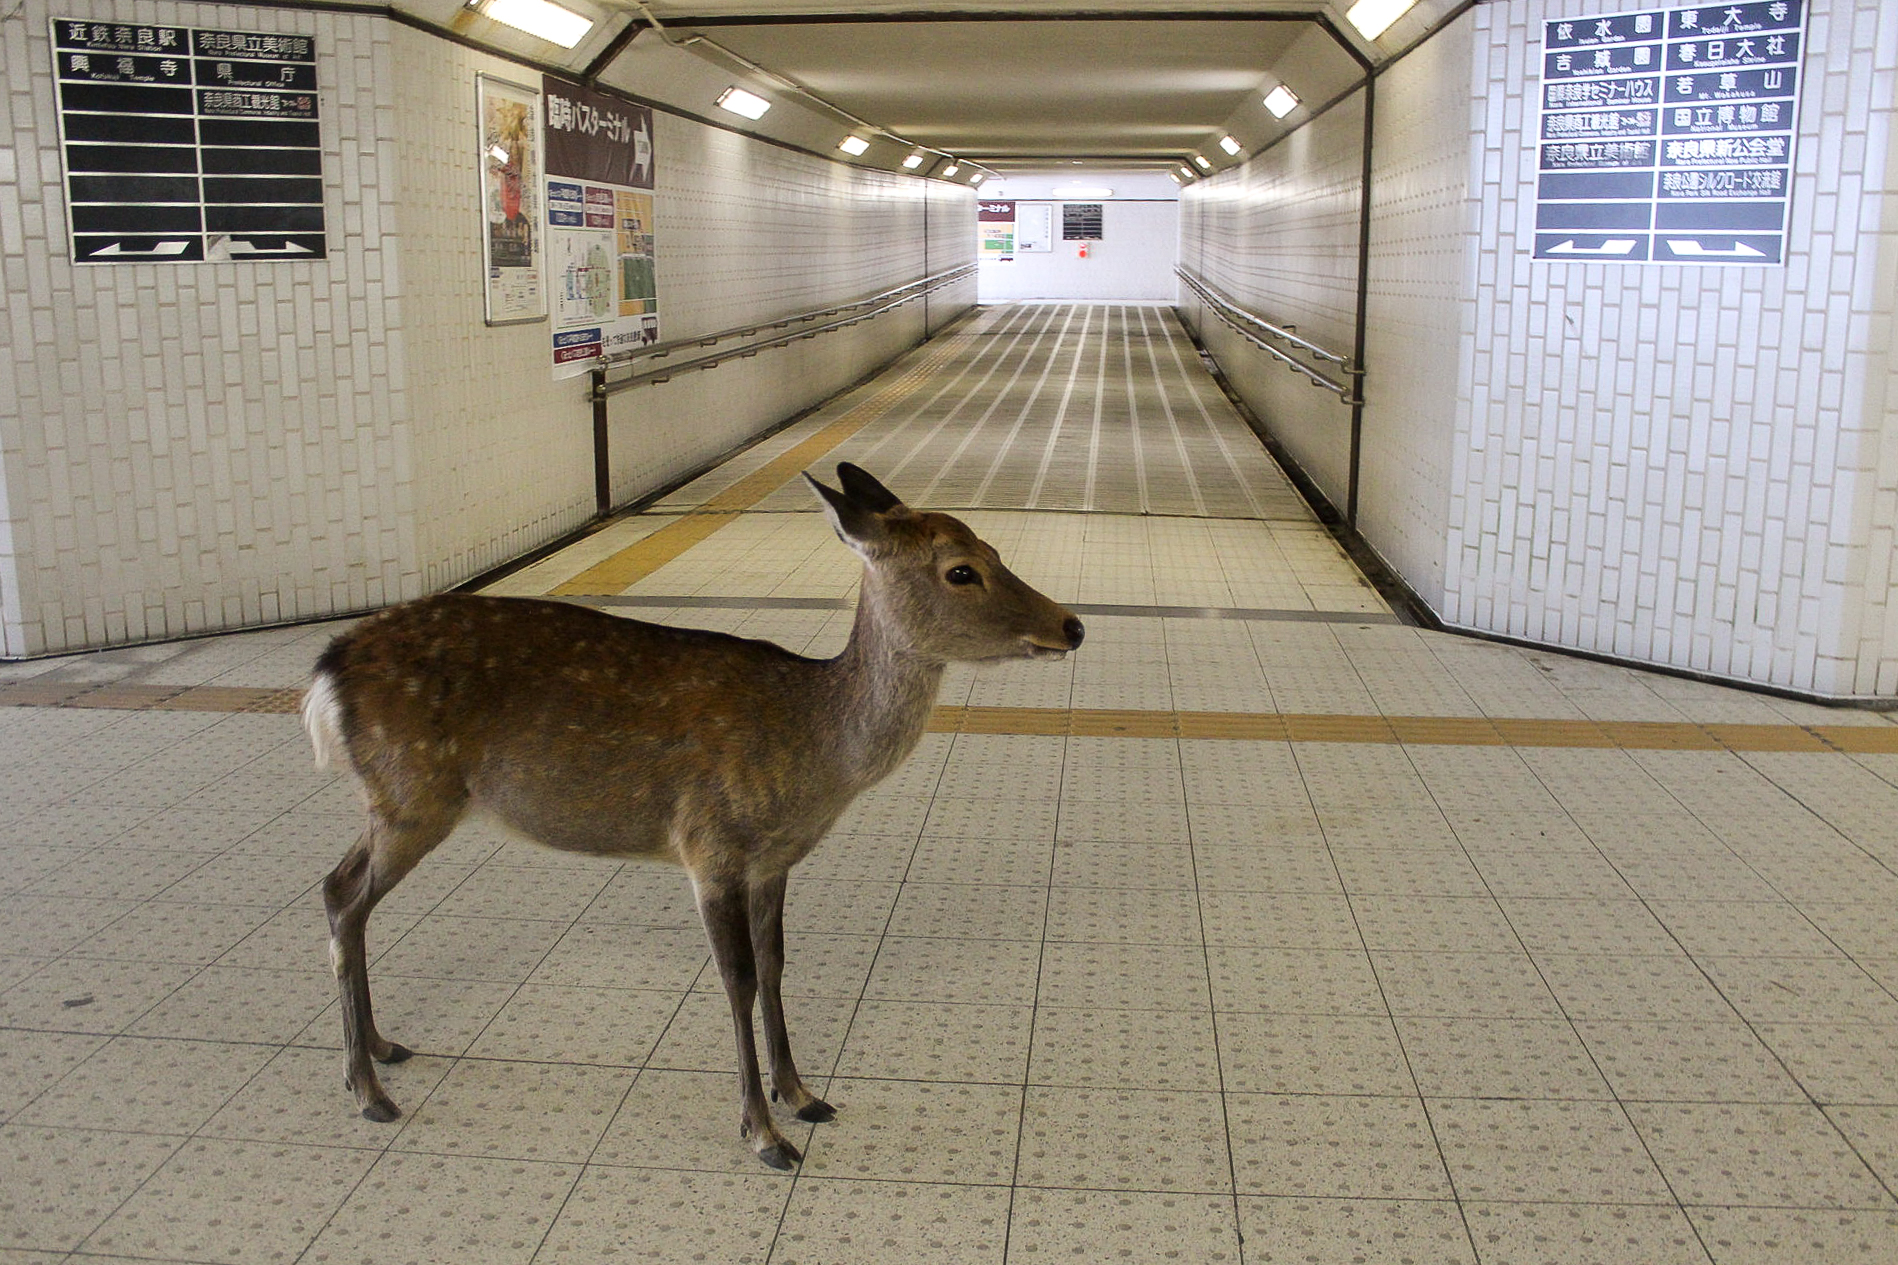 https://soranews24.com/wp-content/uploads/sites/3/2020/03/nara-deer-news-photos-travel-tourists-coronavirus-covid19-.jpg